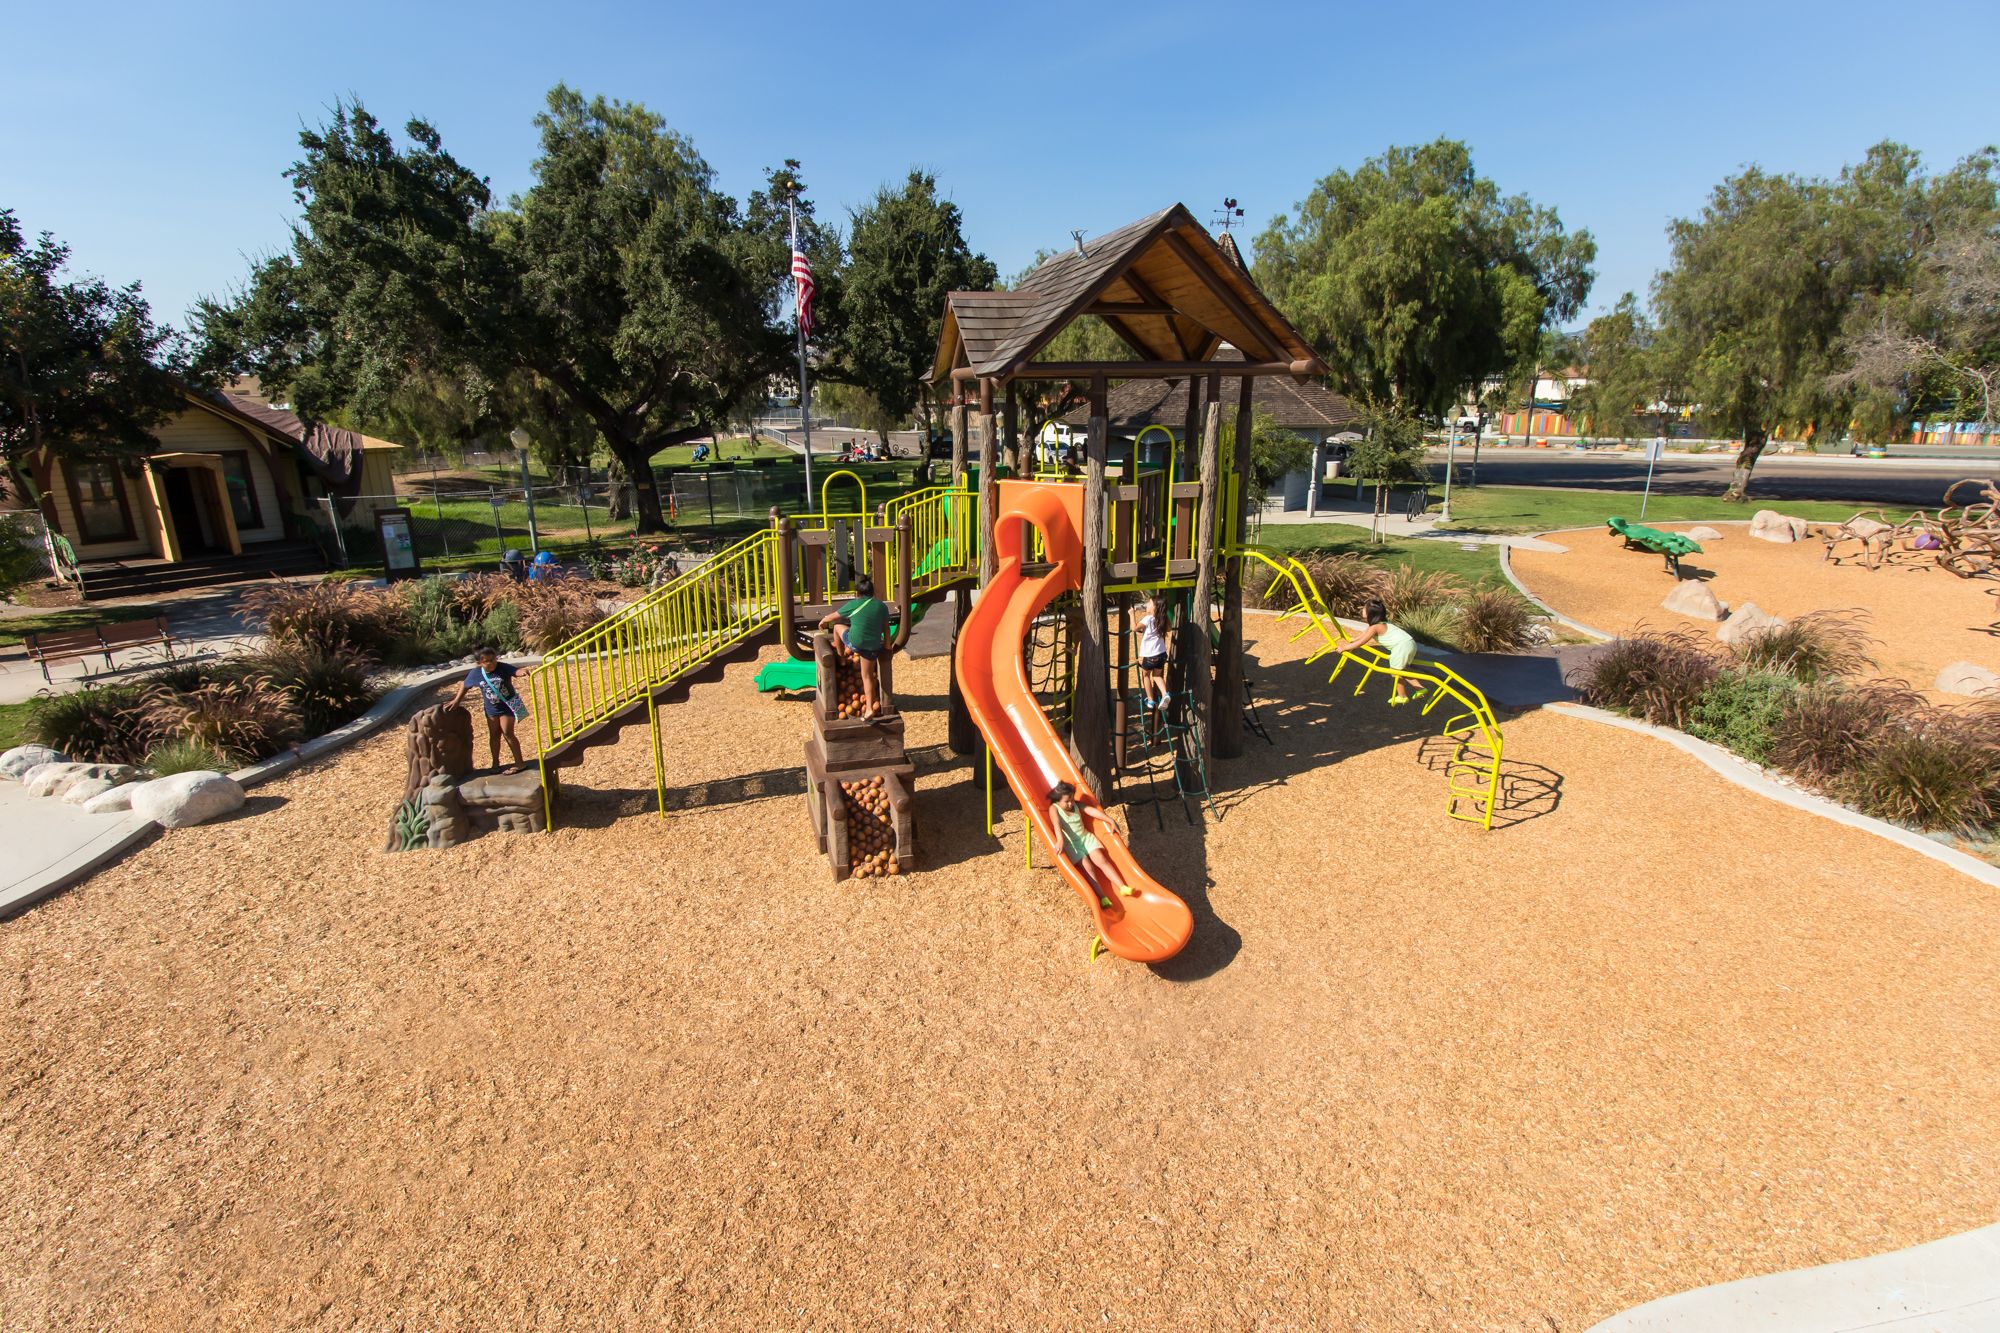 Logged themed playground with orange slide